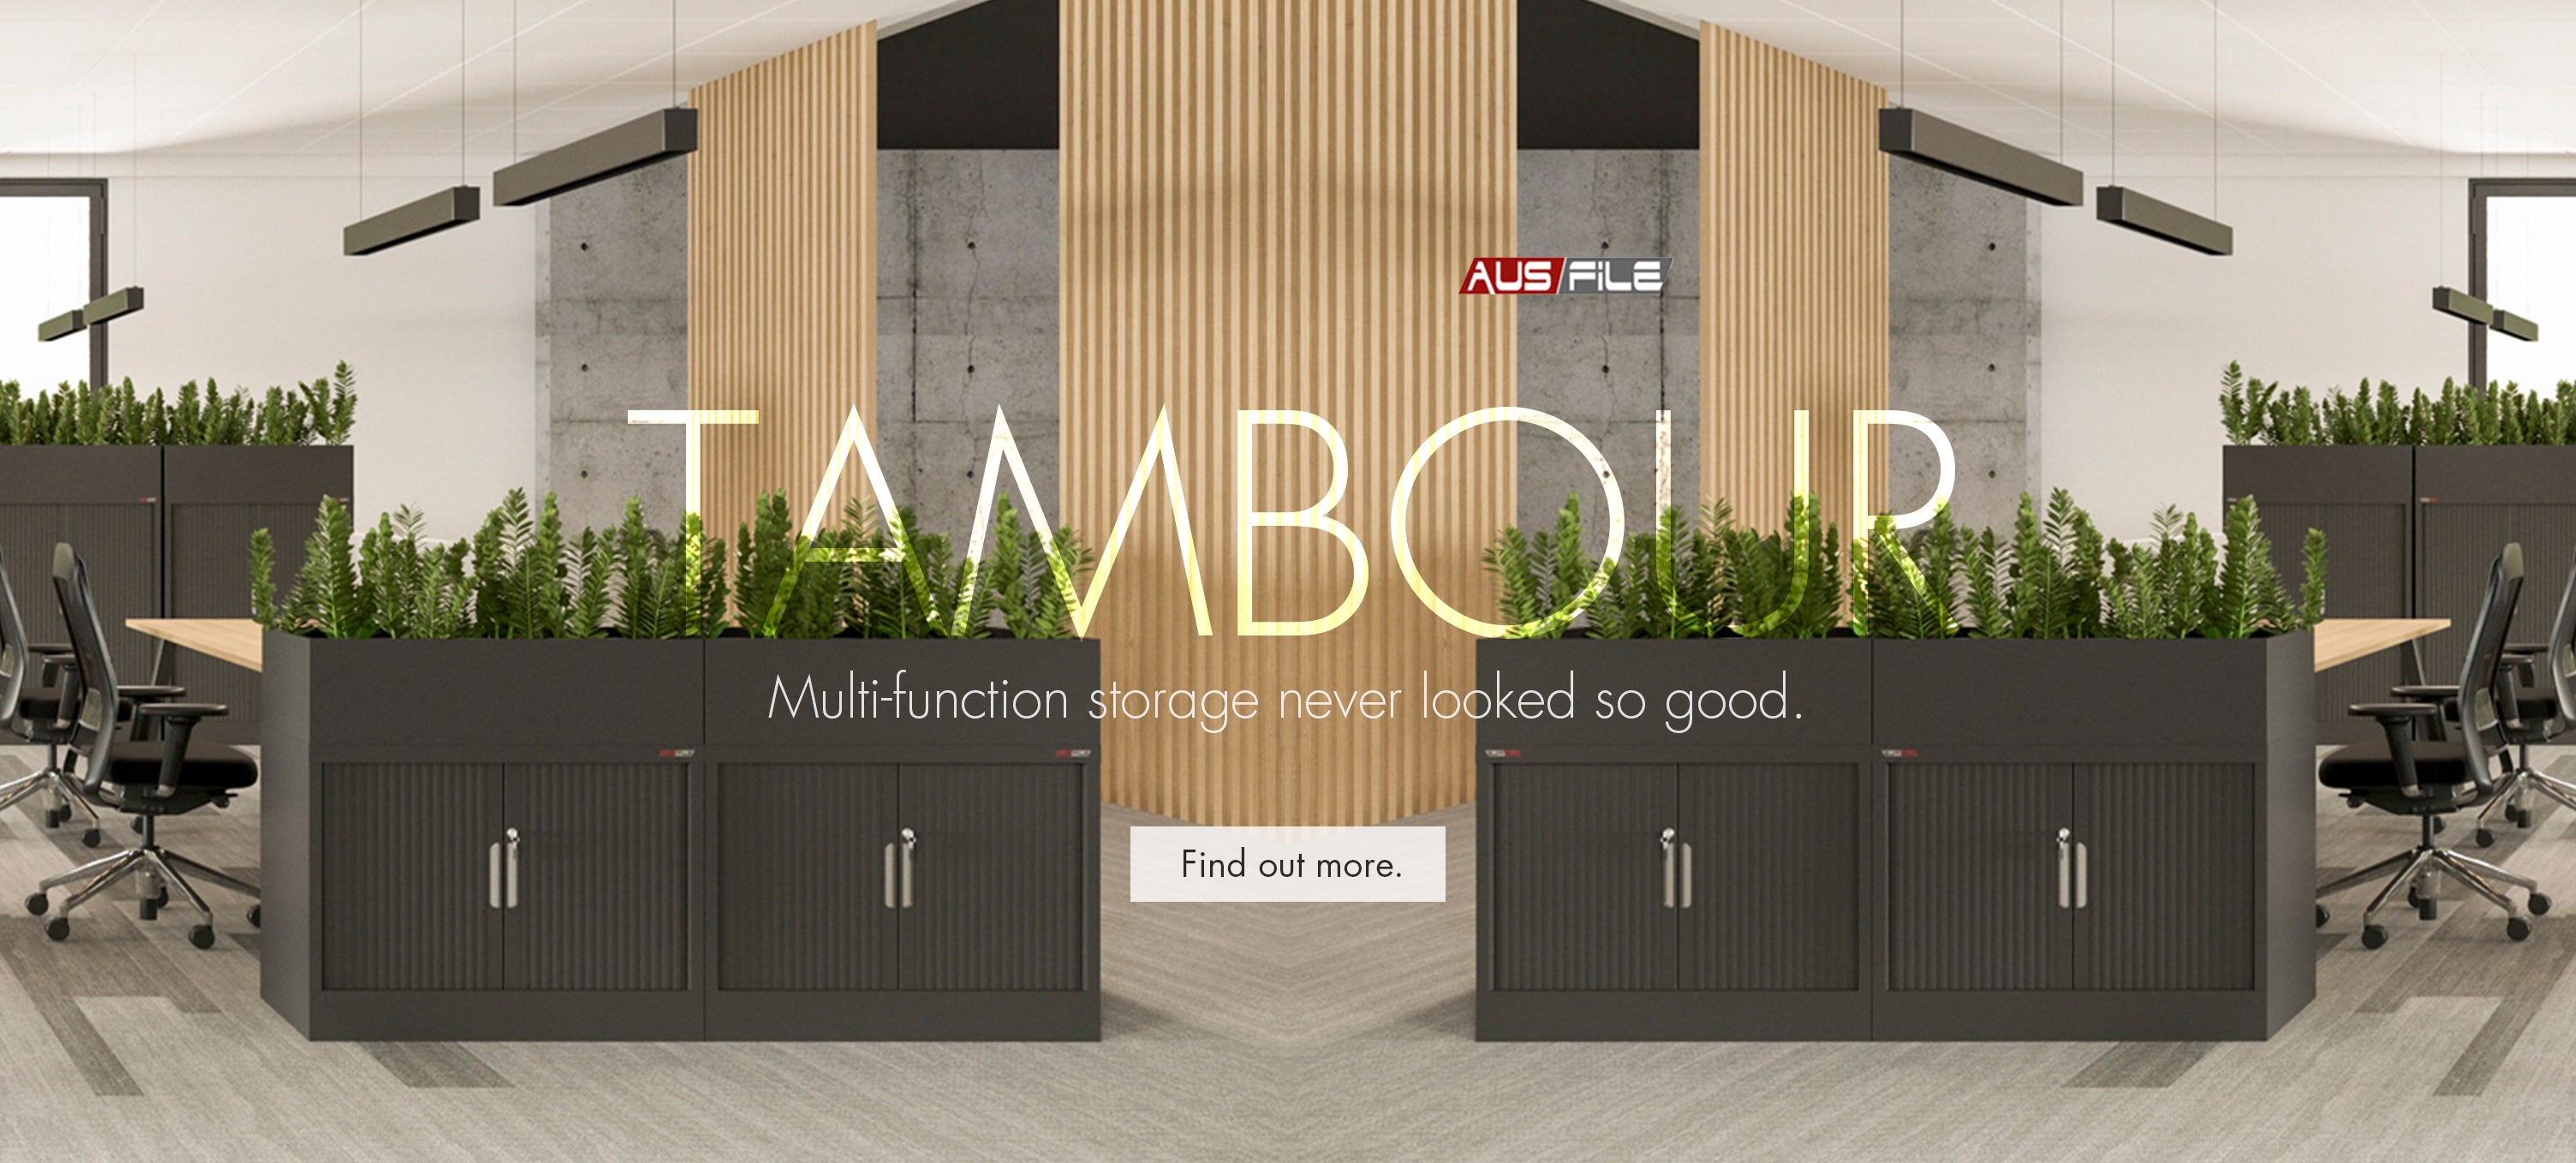 Ausfile Tambour storage planter furniture